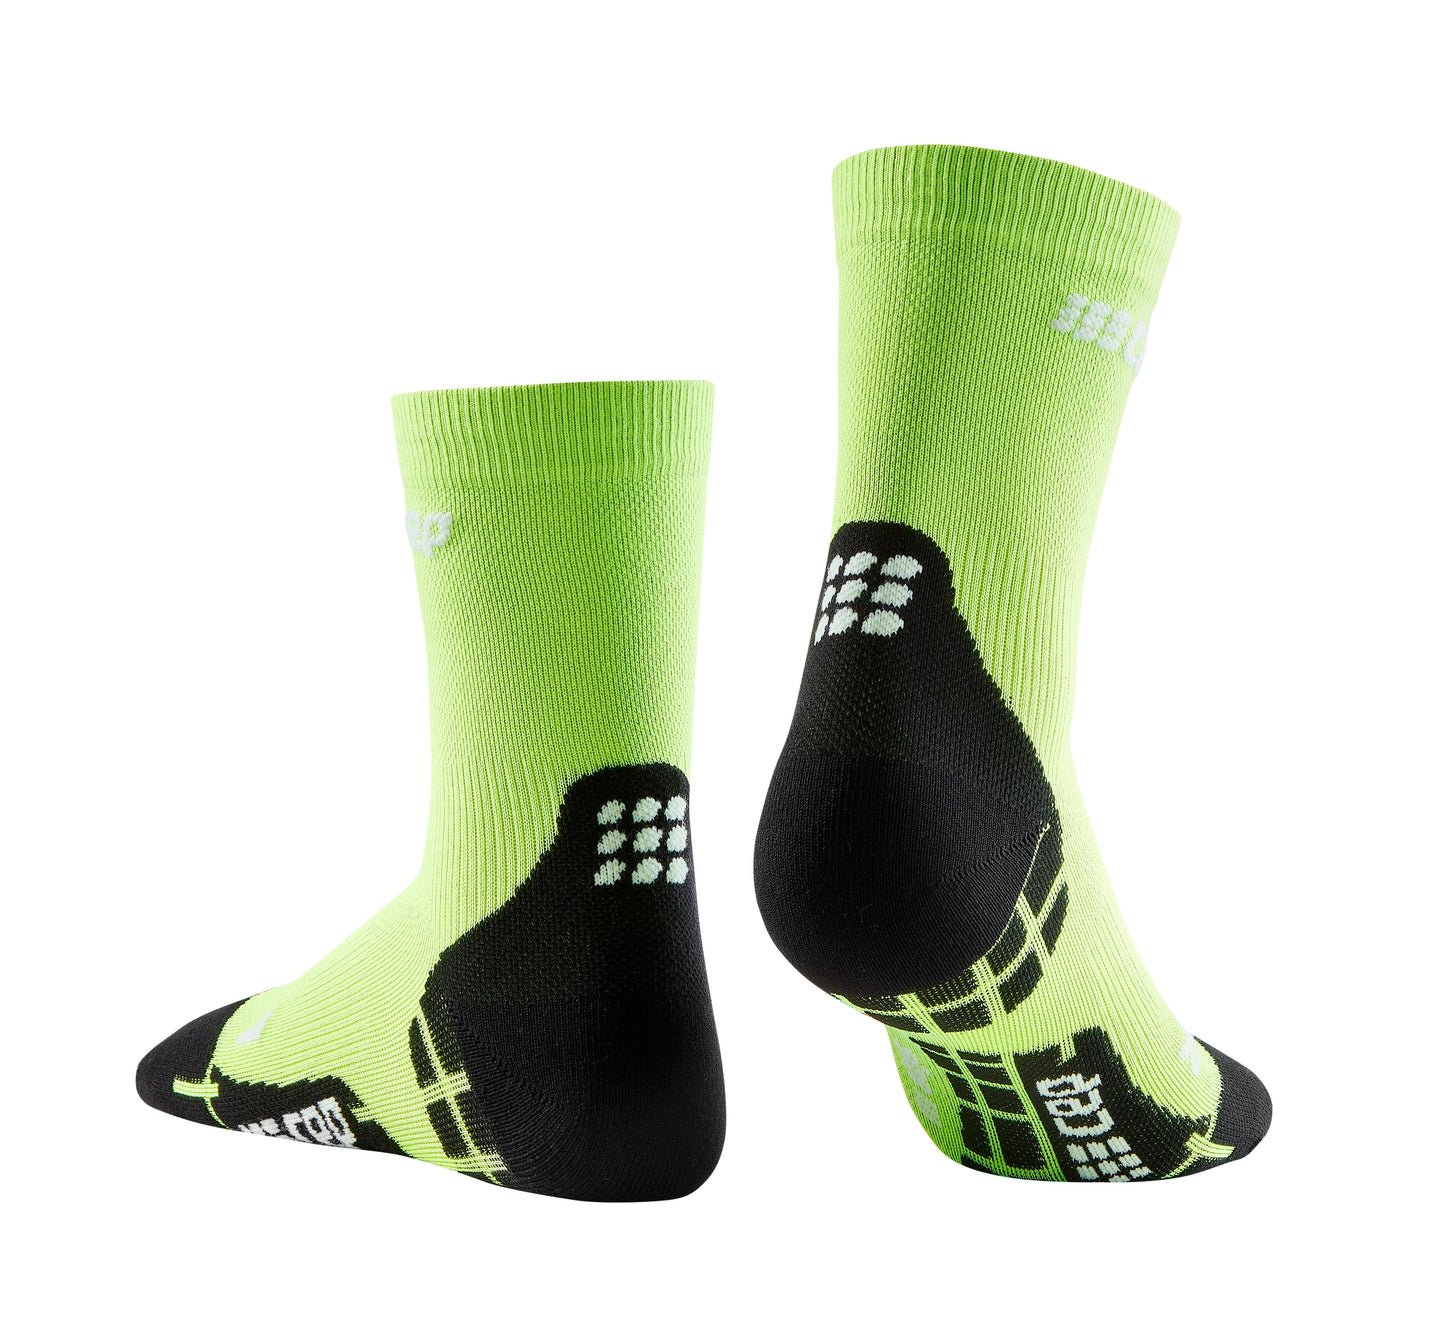 CEP Ultralight  Short Compression Sock Men's - Flash Green / Black